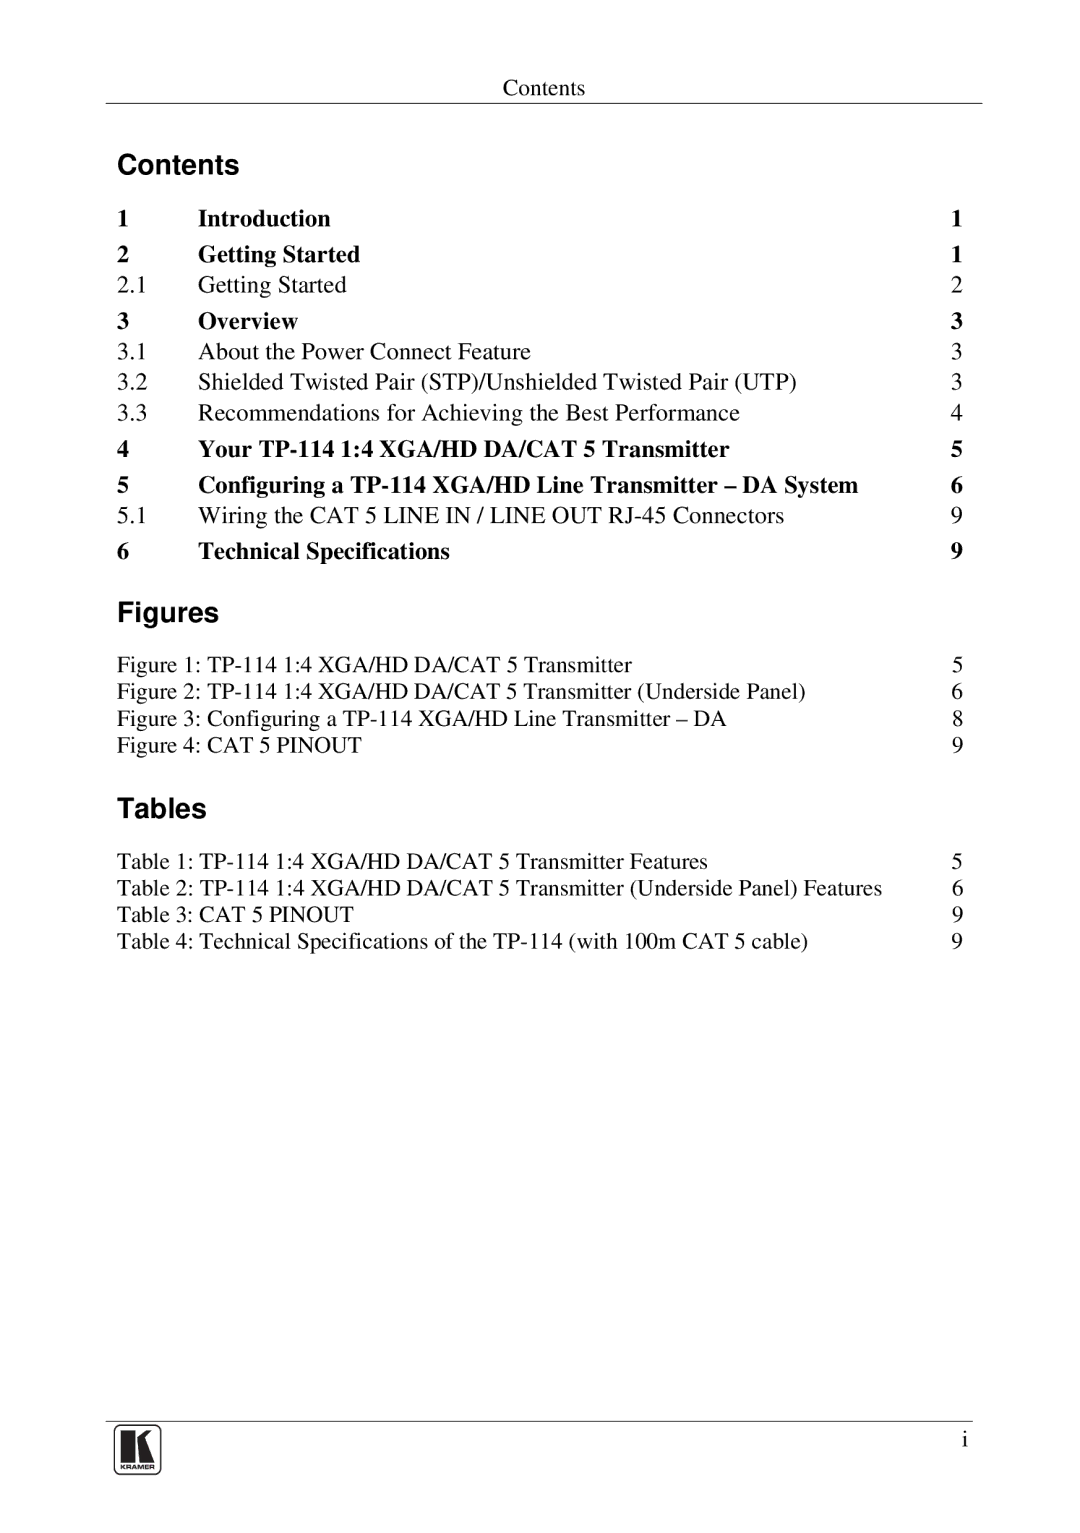 Kramer Electronics TP-114 user manual Contents, Tables 